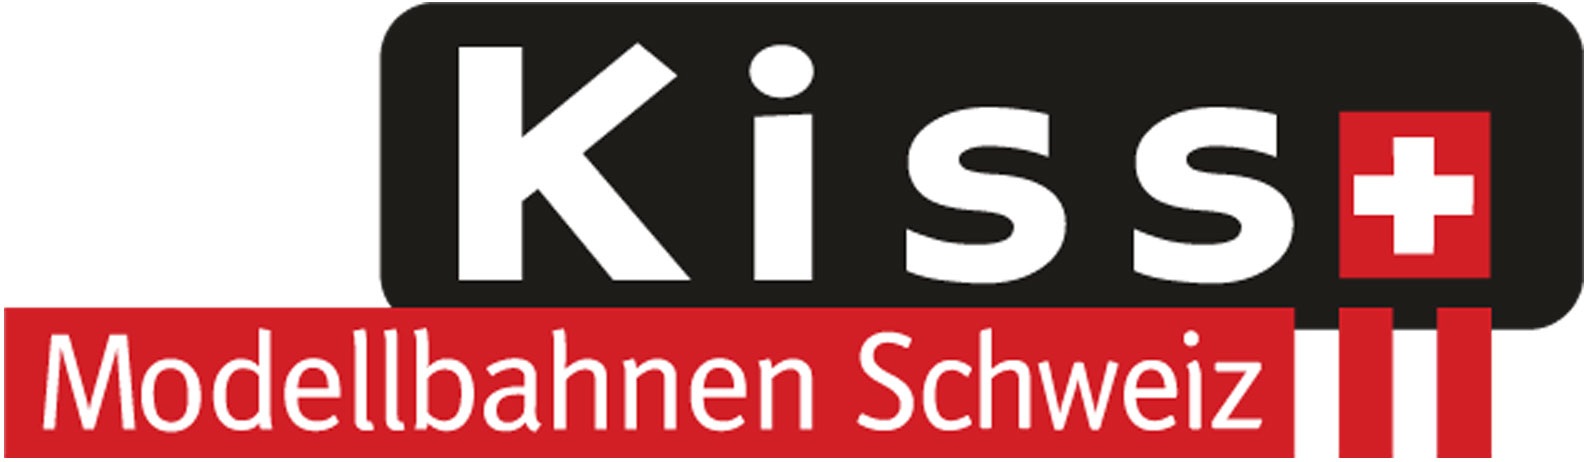 Kiss Modellbahnen Schweiz